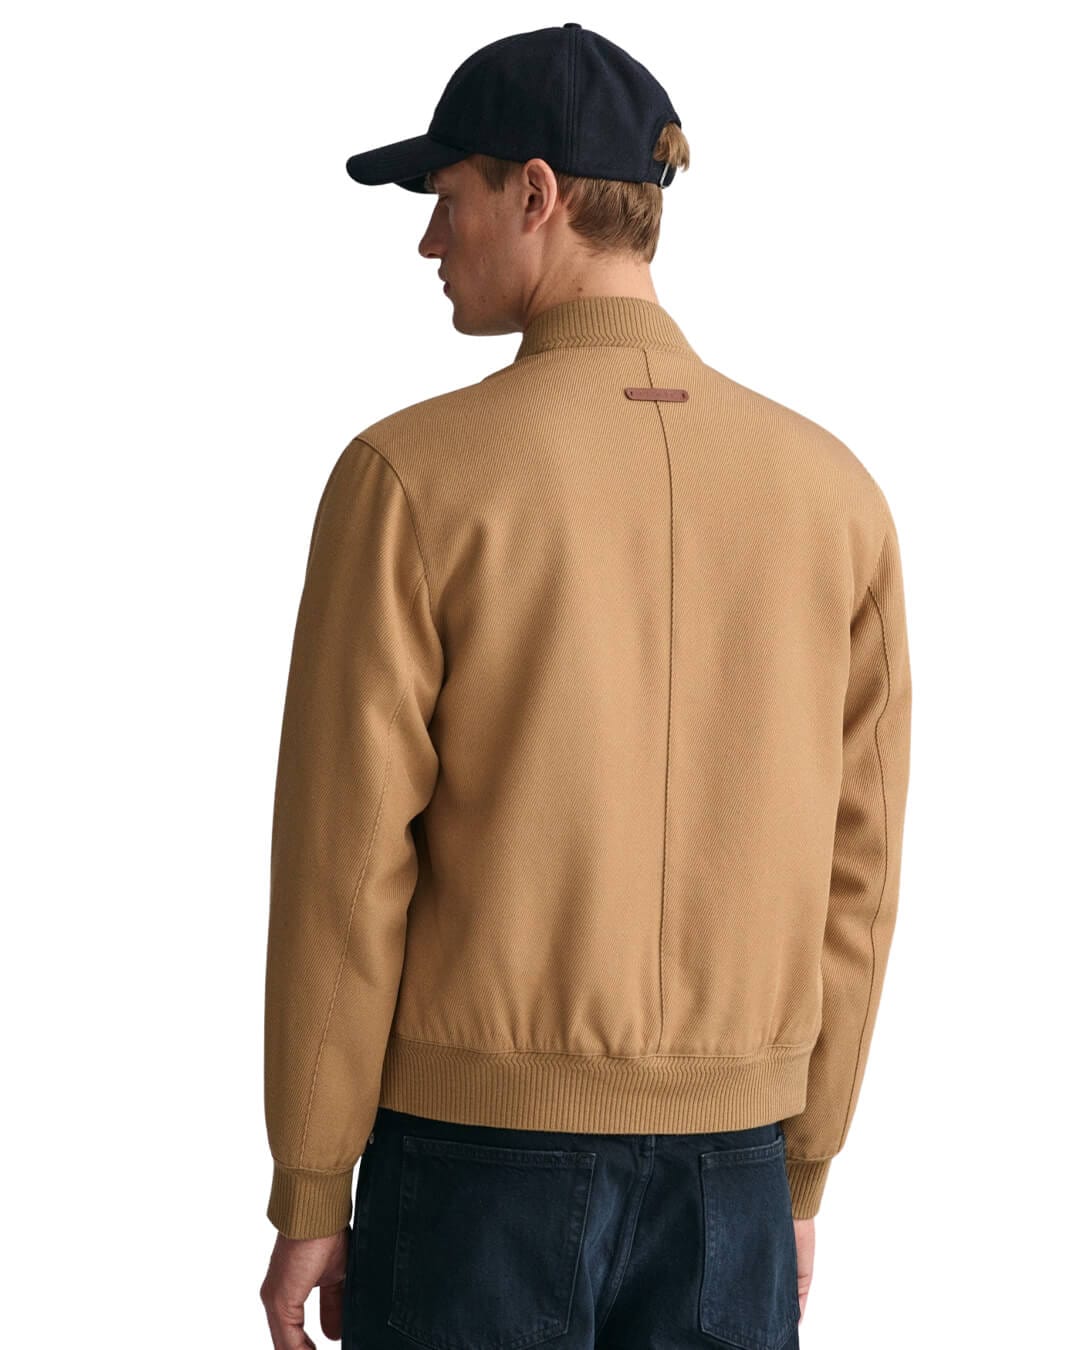 Gant Outerwear Gant Warm Khaki Bomber Jacket